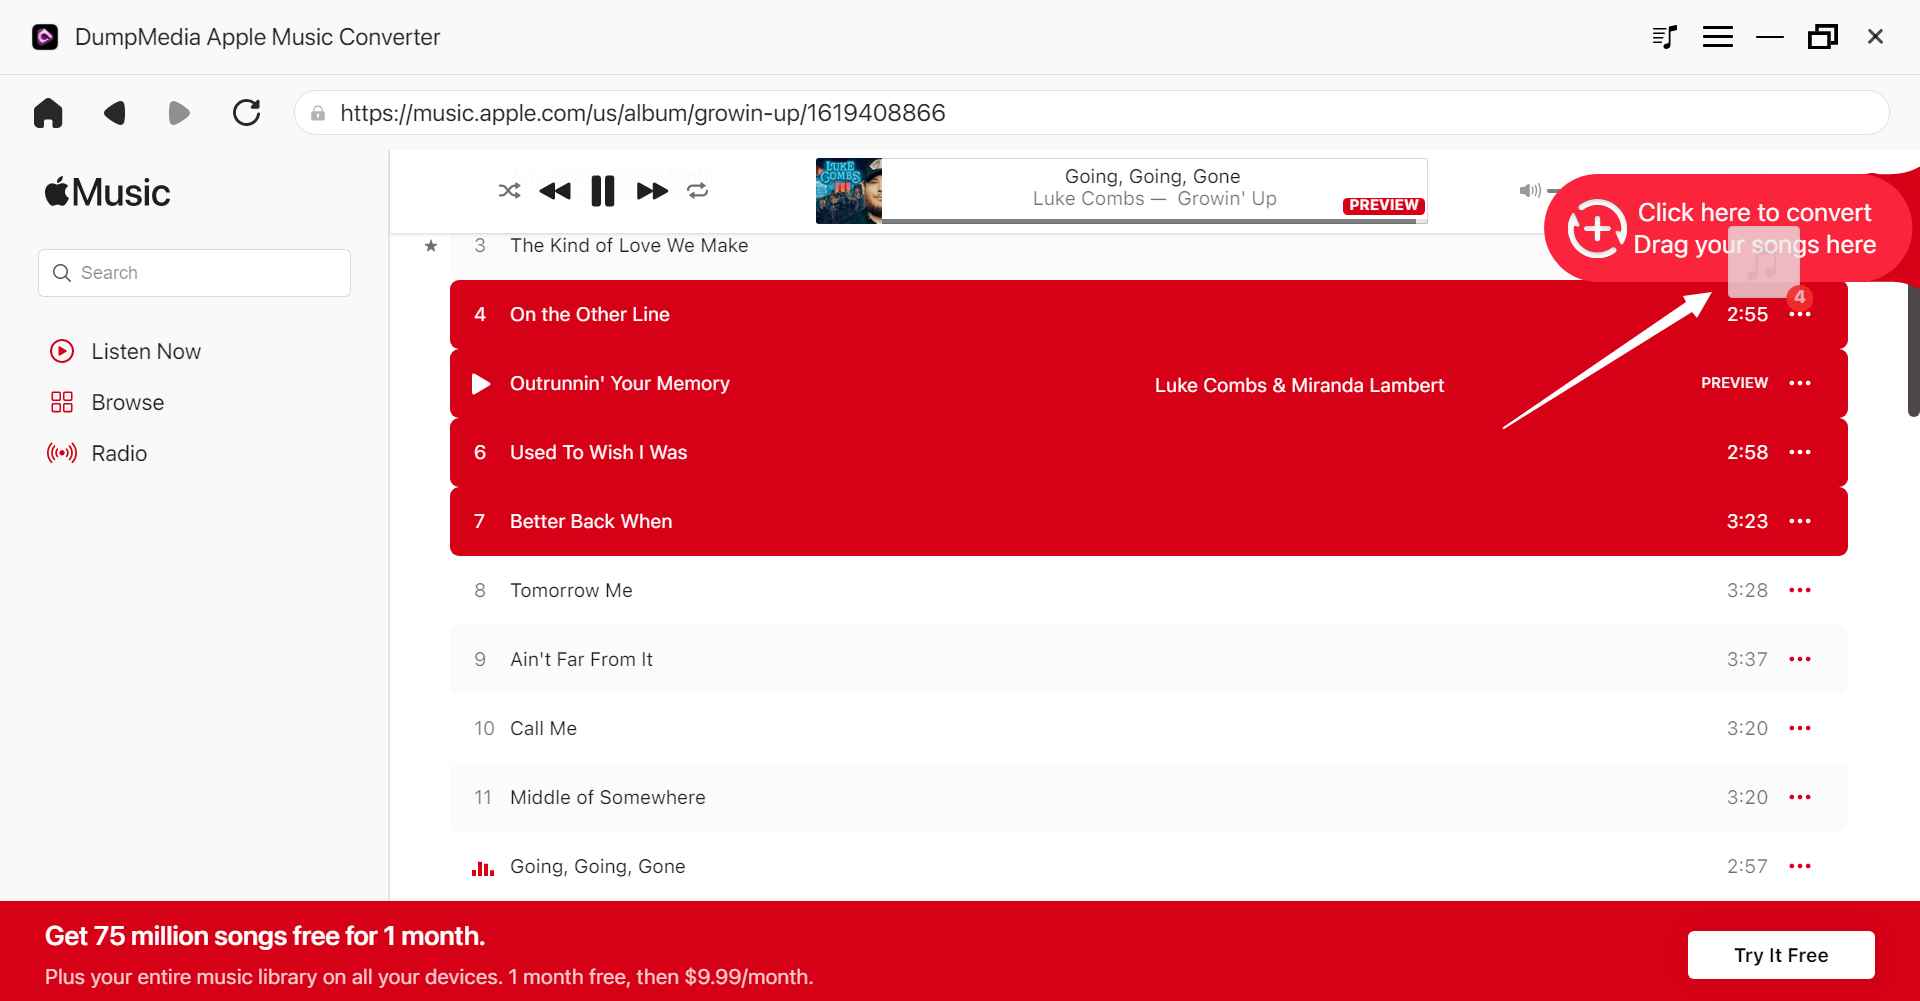 The Best Apple Music Converter Software: DumpMedia Apple Music Converter - Add Files